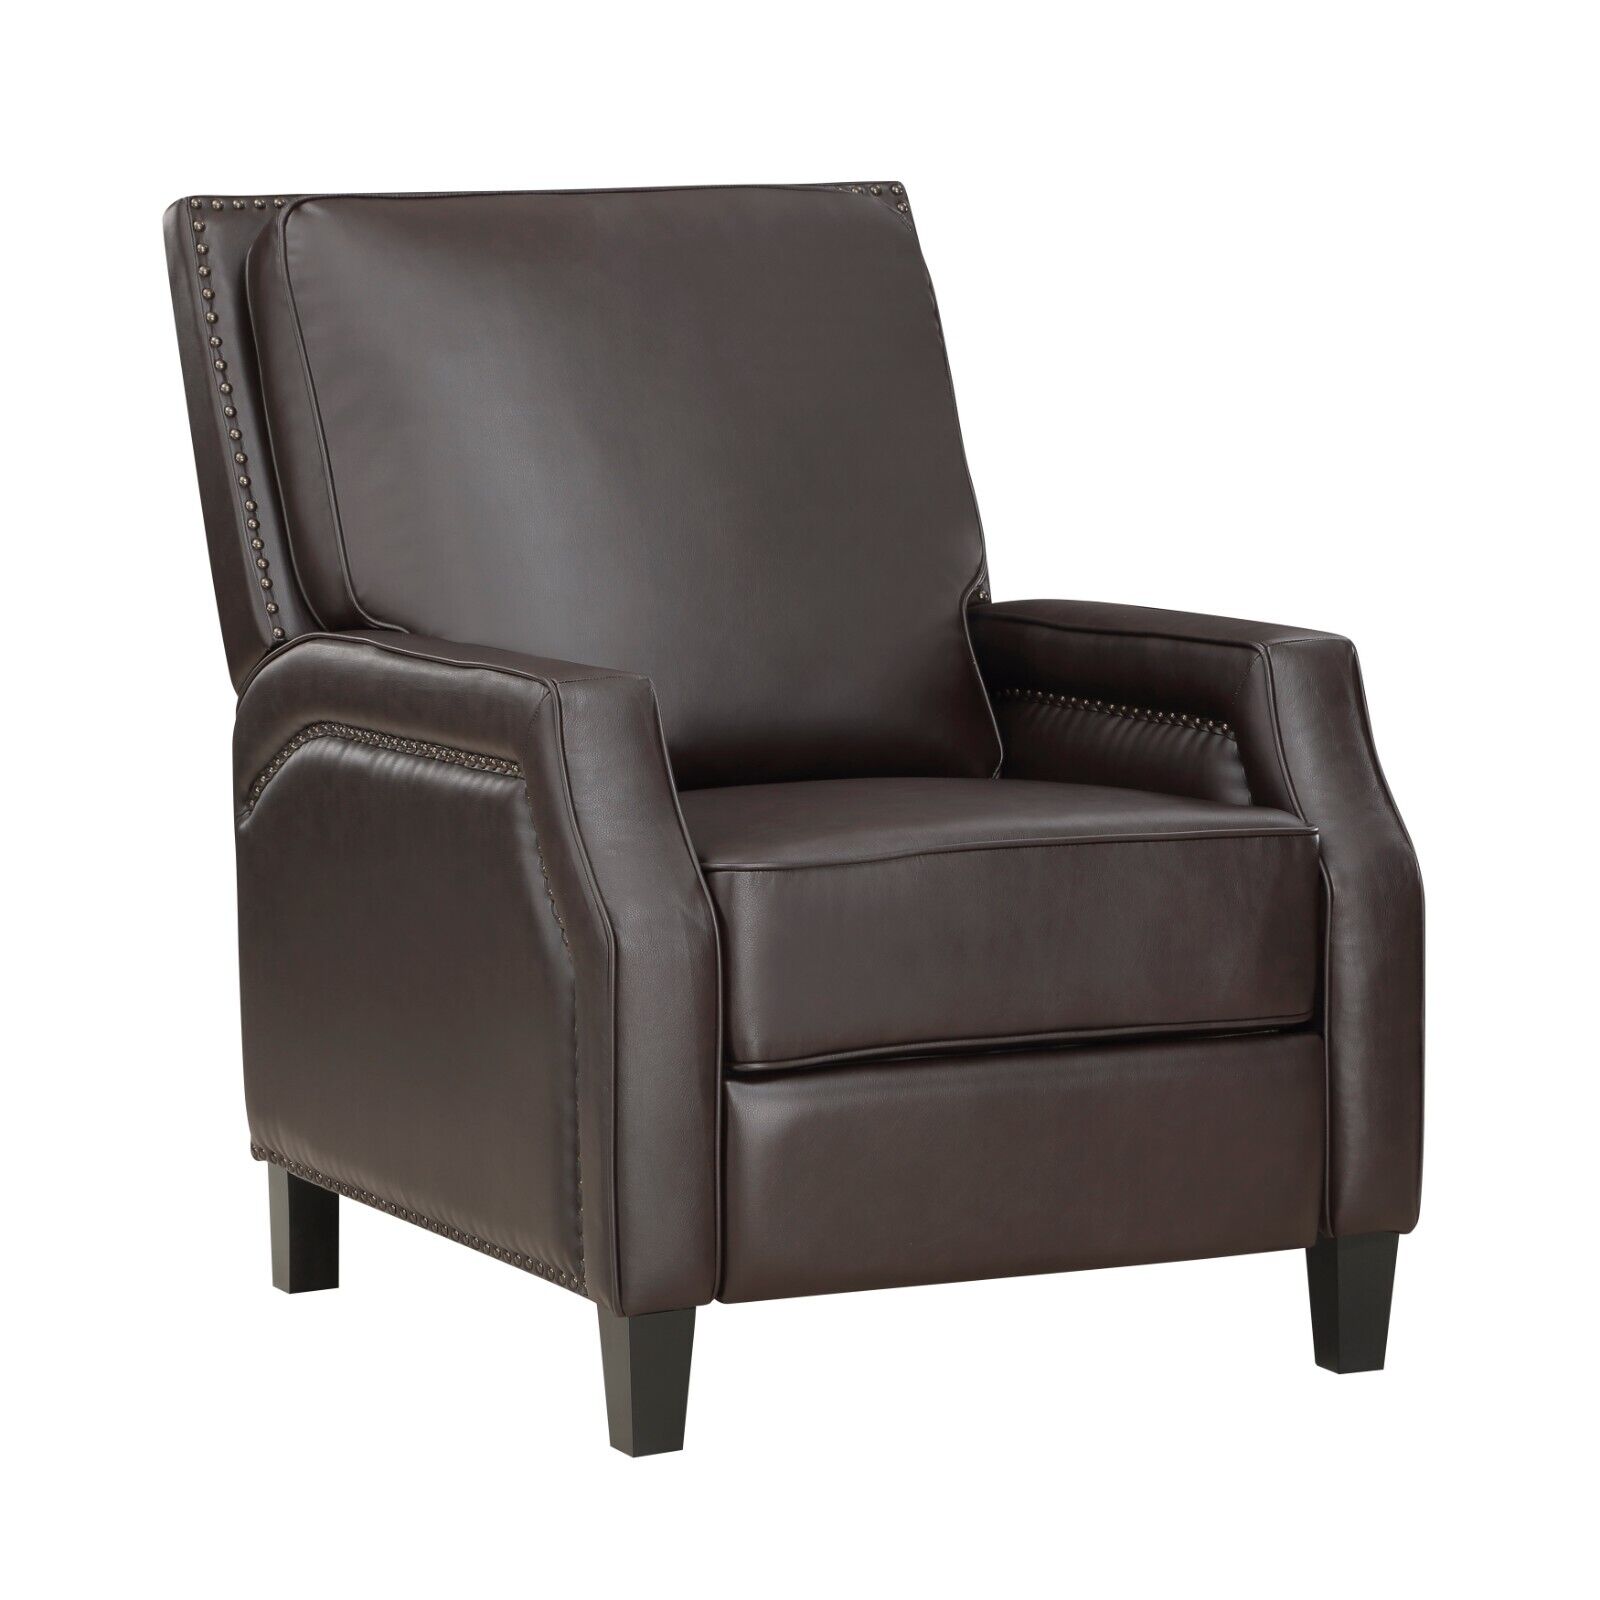 Esofastore 1pc Self Reclining Chair Dark Brown Faux Leather Solidwood Furntiure for Livinig Room Bedroom Push Back Reclining Nailhead Trim